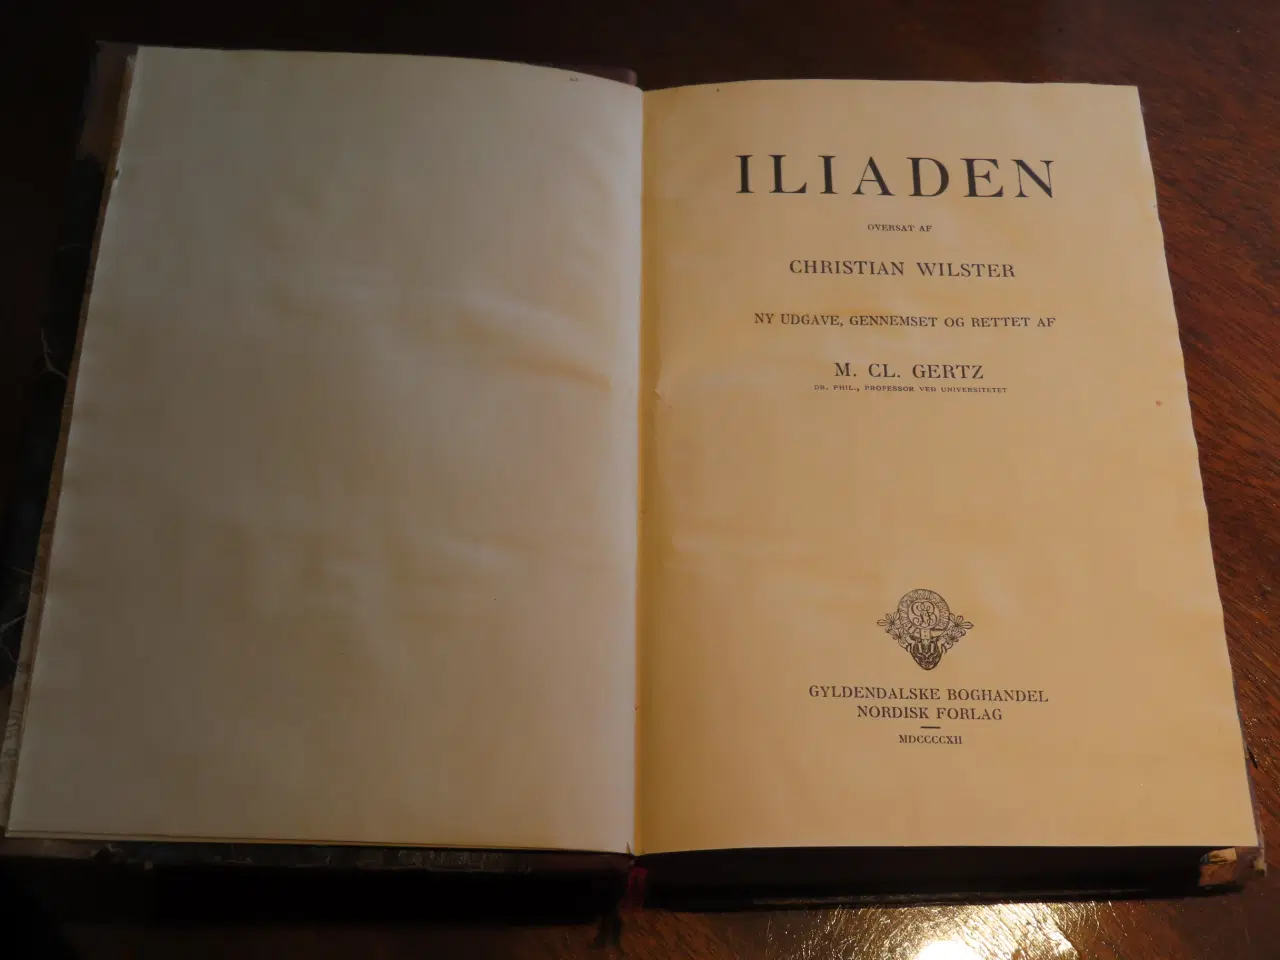 Billede 2 - Homers "Iliaden", oversat af Chr. Wilster